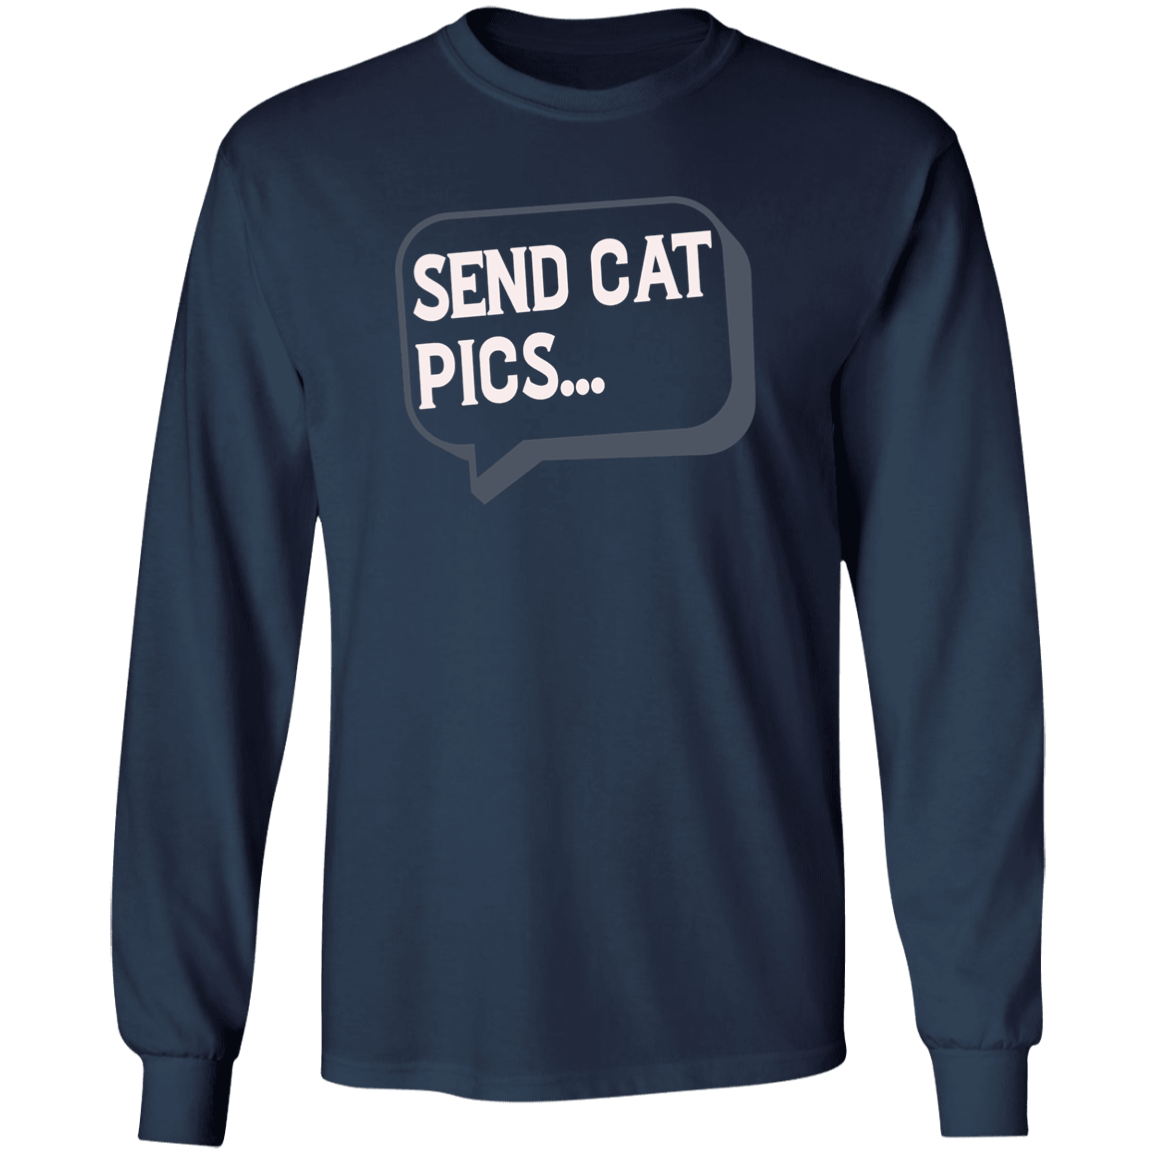 Send Cat Pics - Long Sleeve T Shirt.